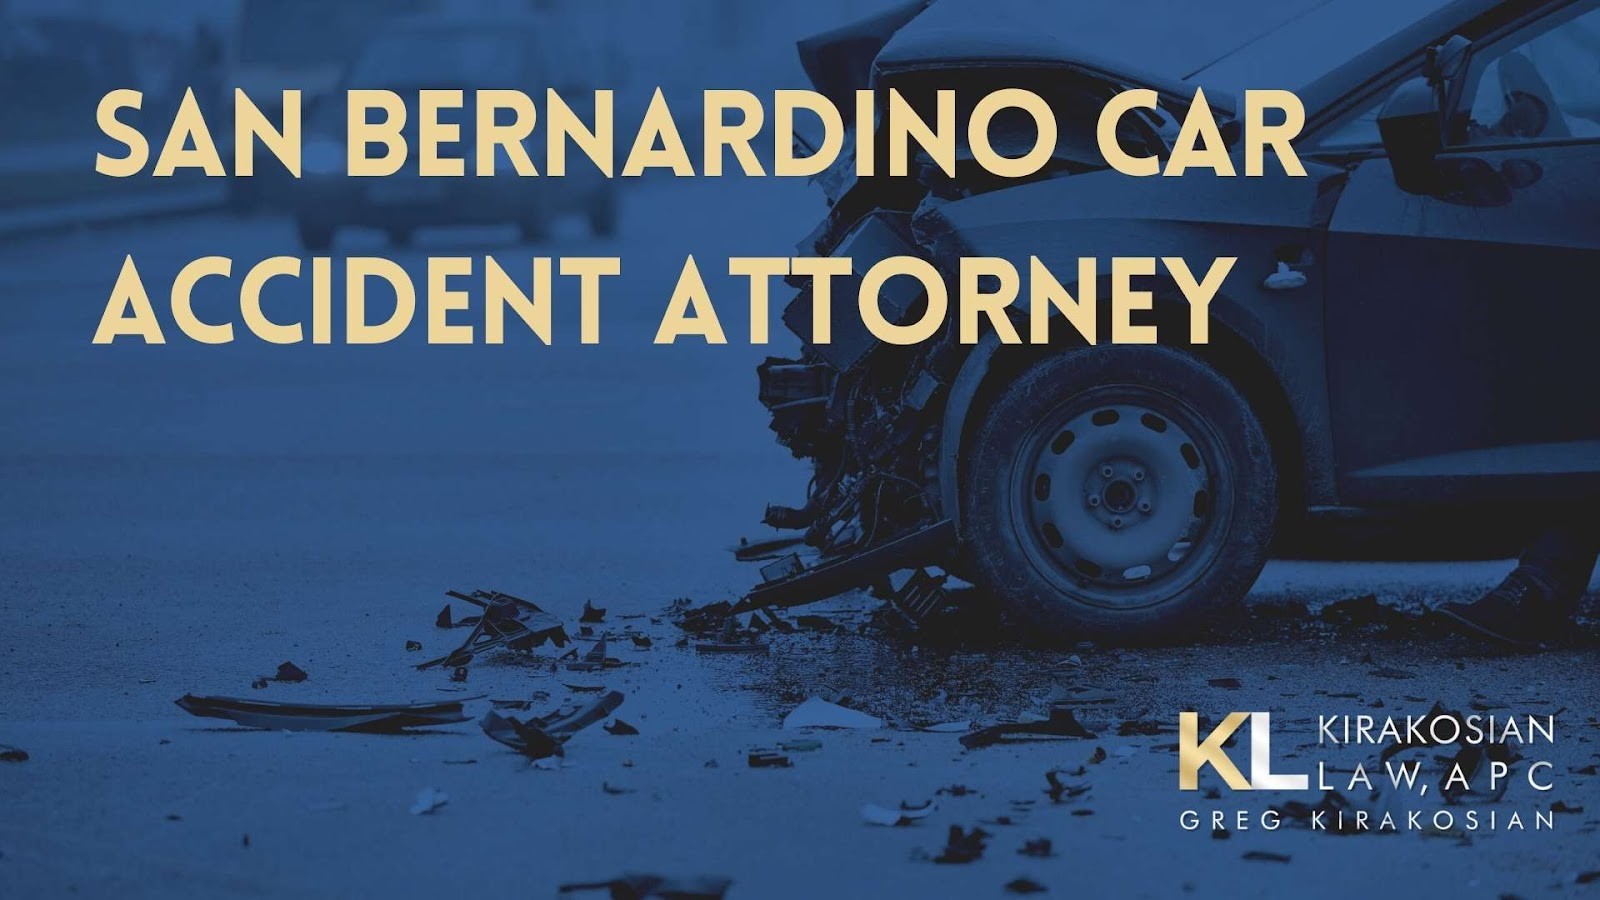 San Bernardino Car Accident Attorney